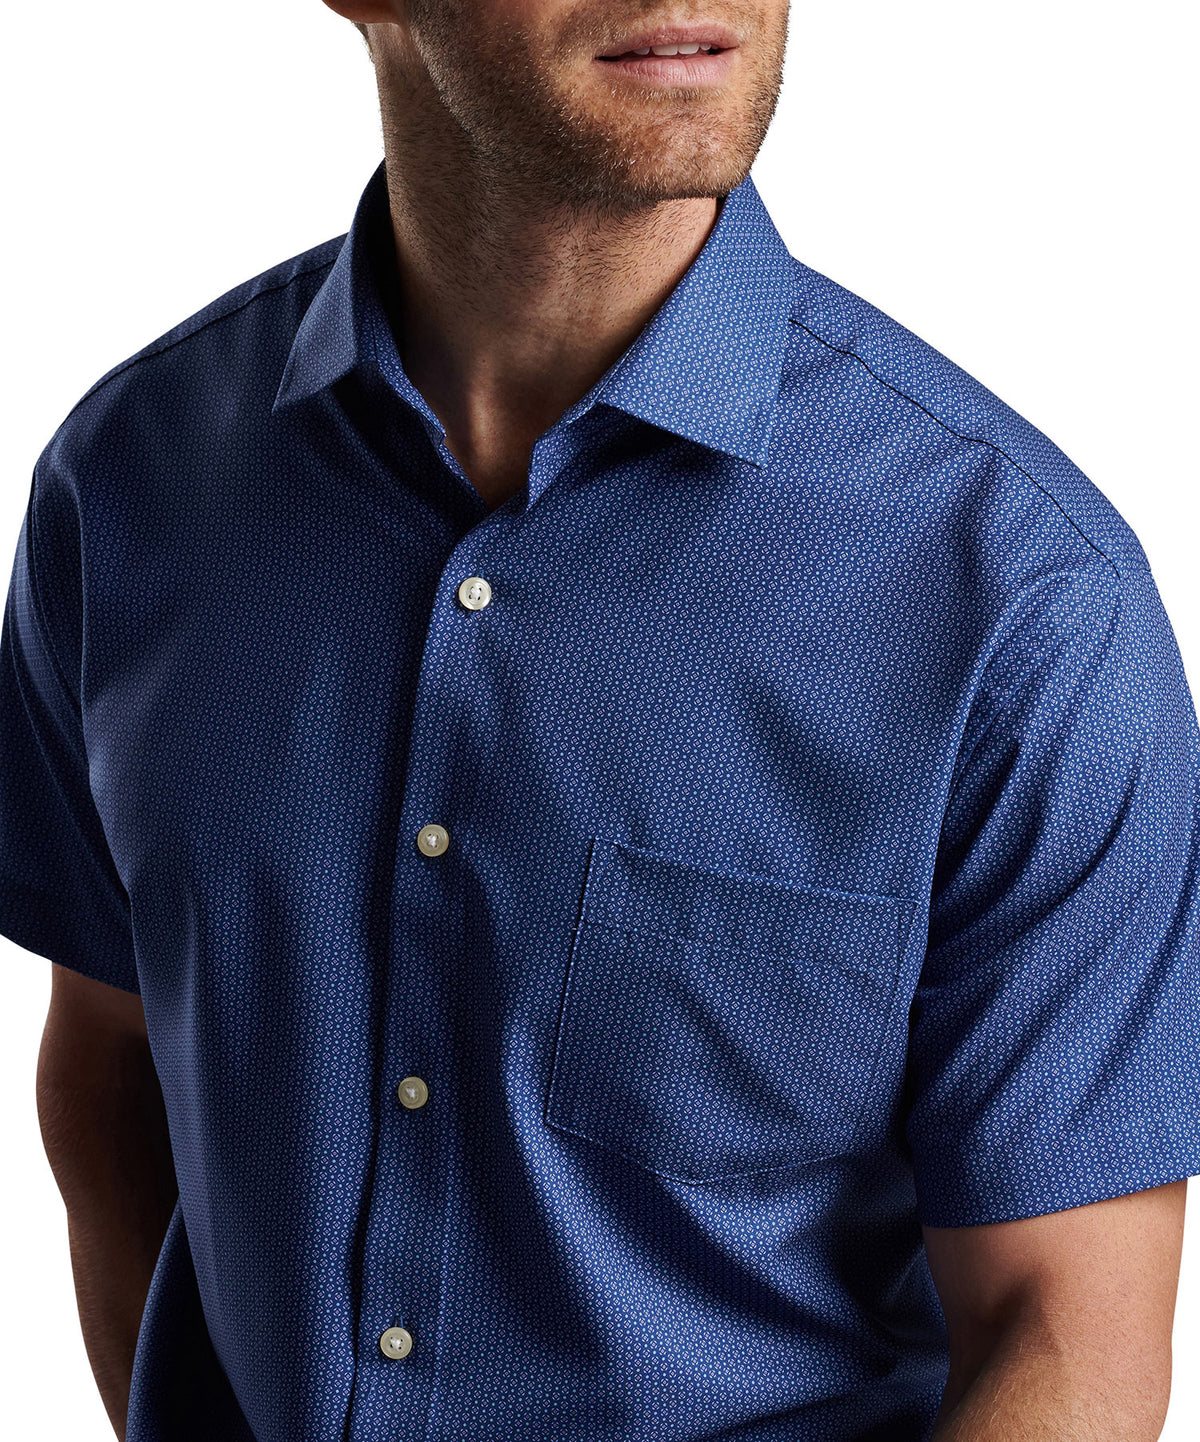 Peter Millar Bloques Print Short Sleeve Spread Collar Sport Shirt, Big & Tall